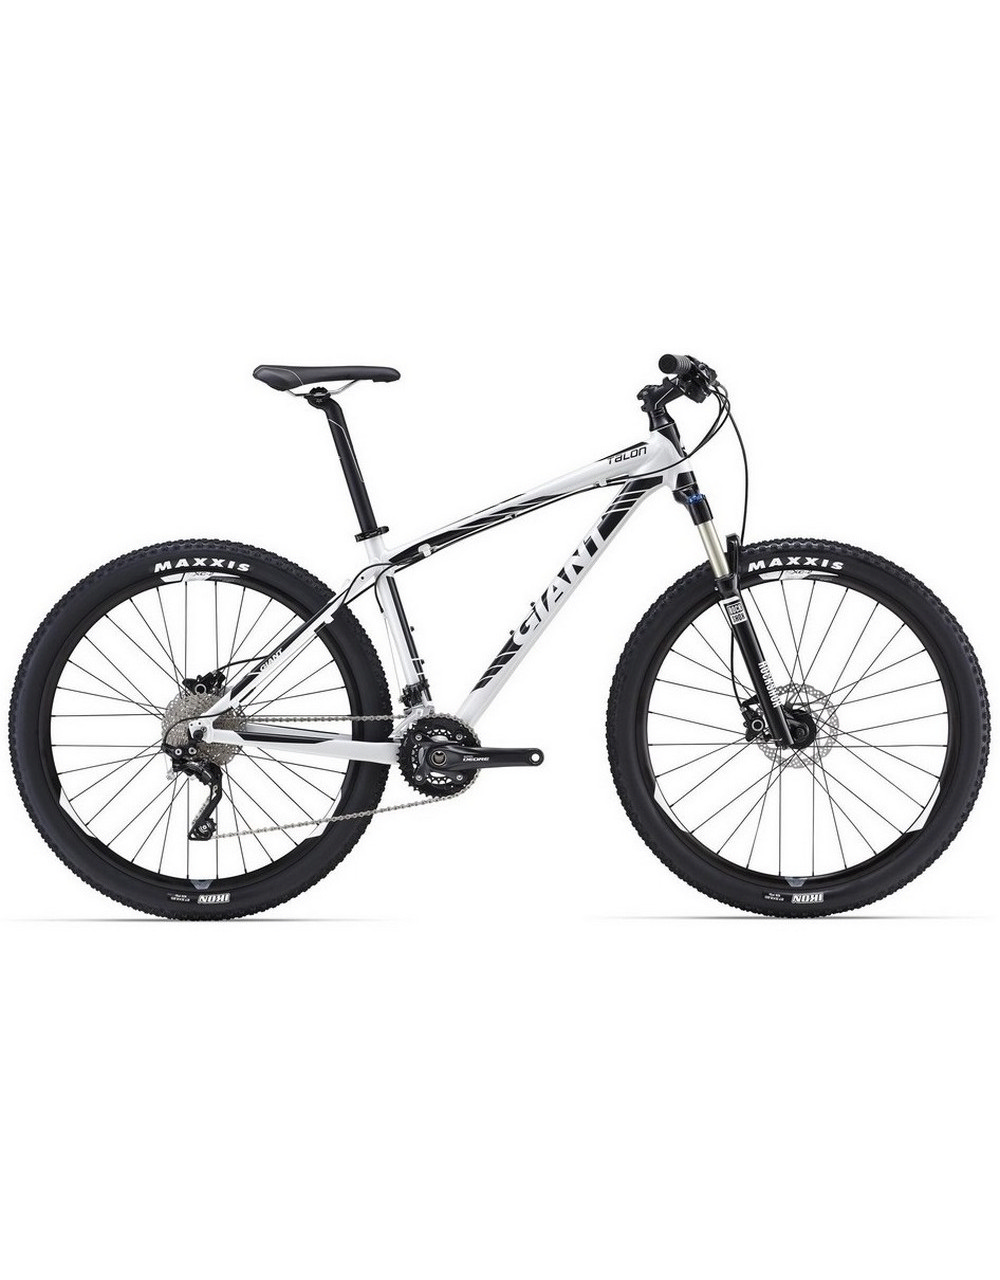 GIANT Велосипед TALON 1 27.5" 2016 Артикул: 6004025